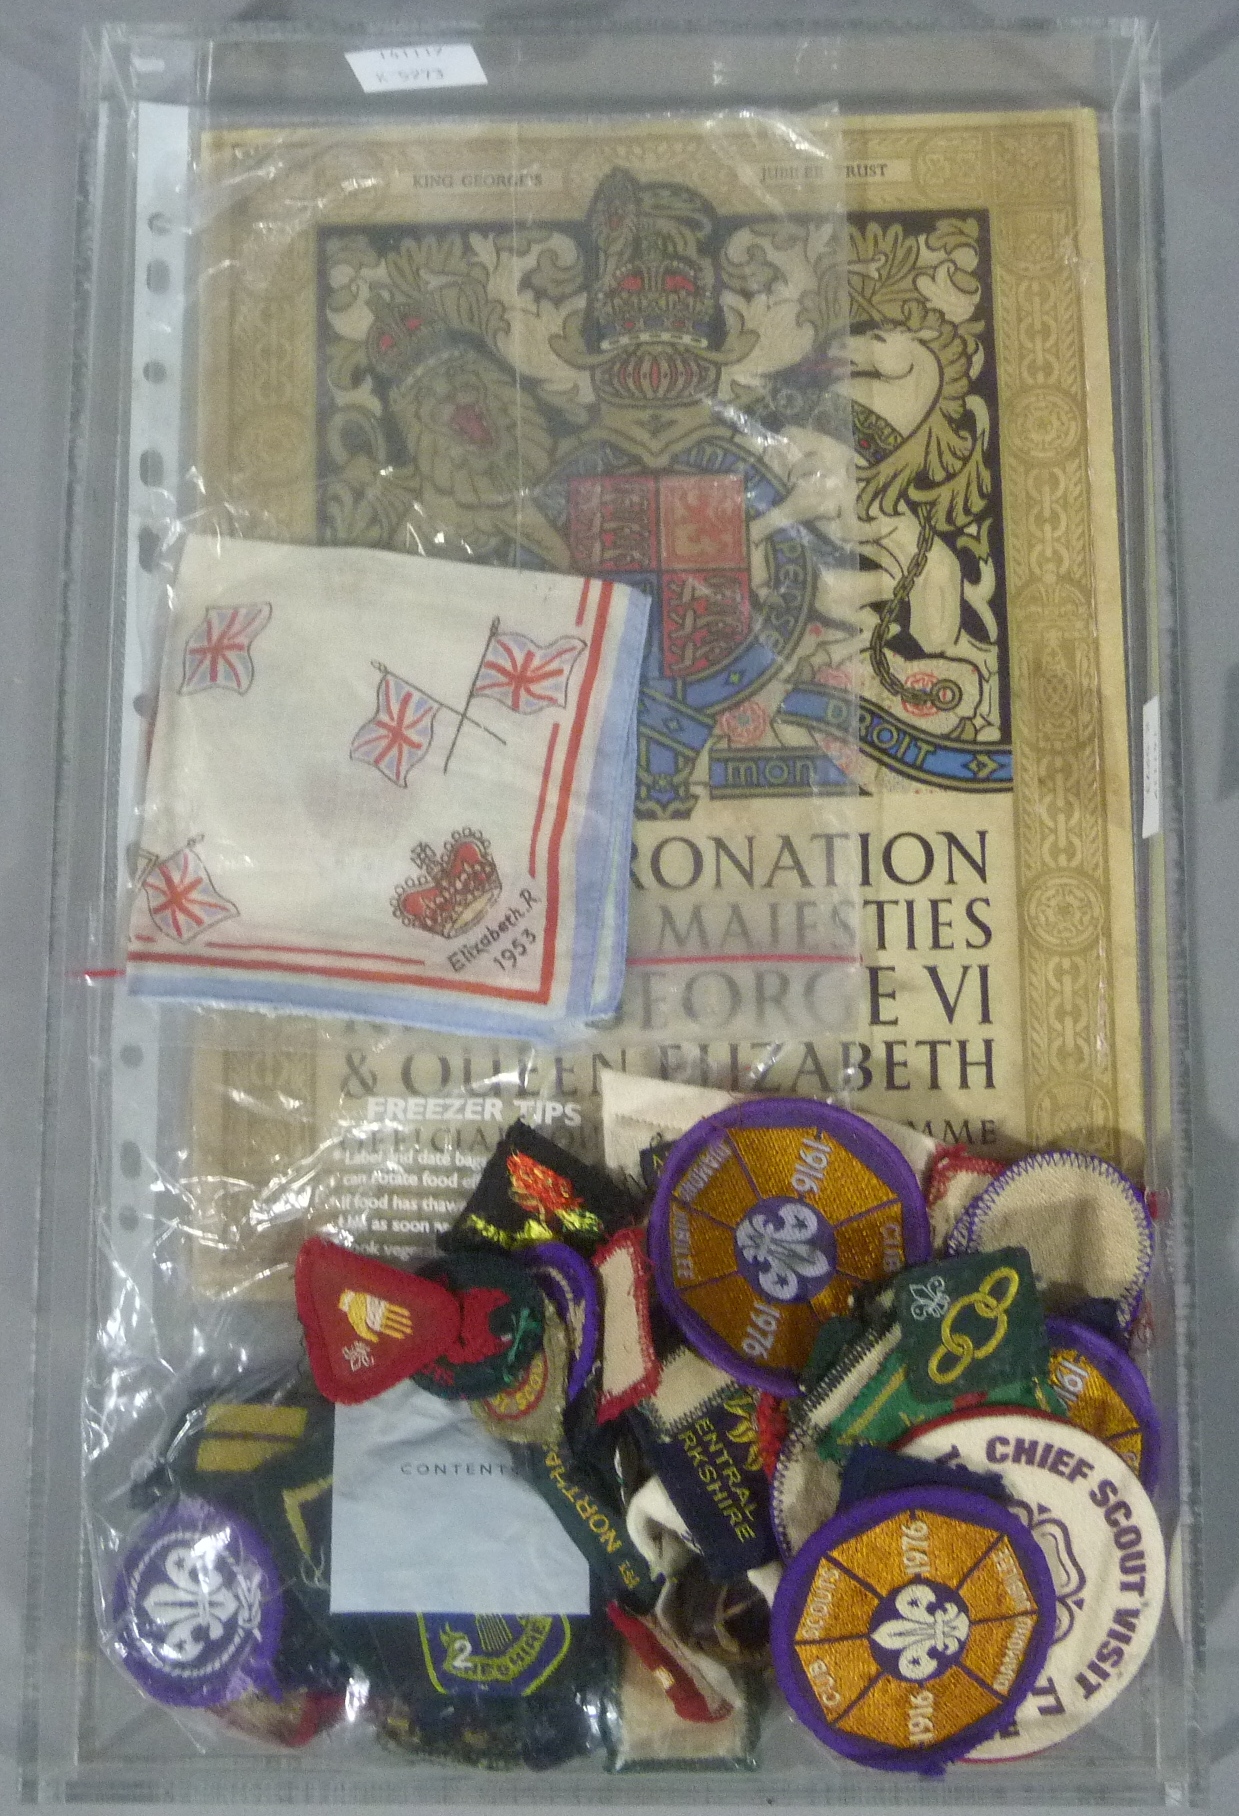 A quantity of Royal memorabilia including handkerchief along with a quantity of scouting memorabilia